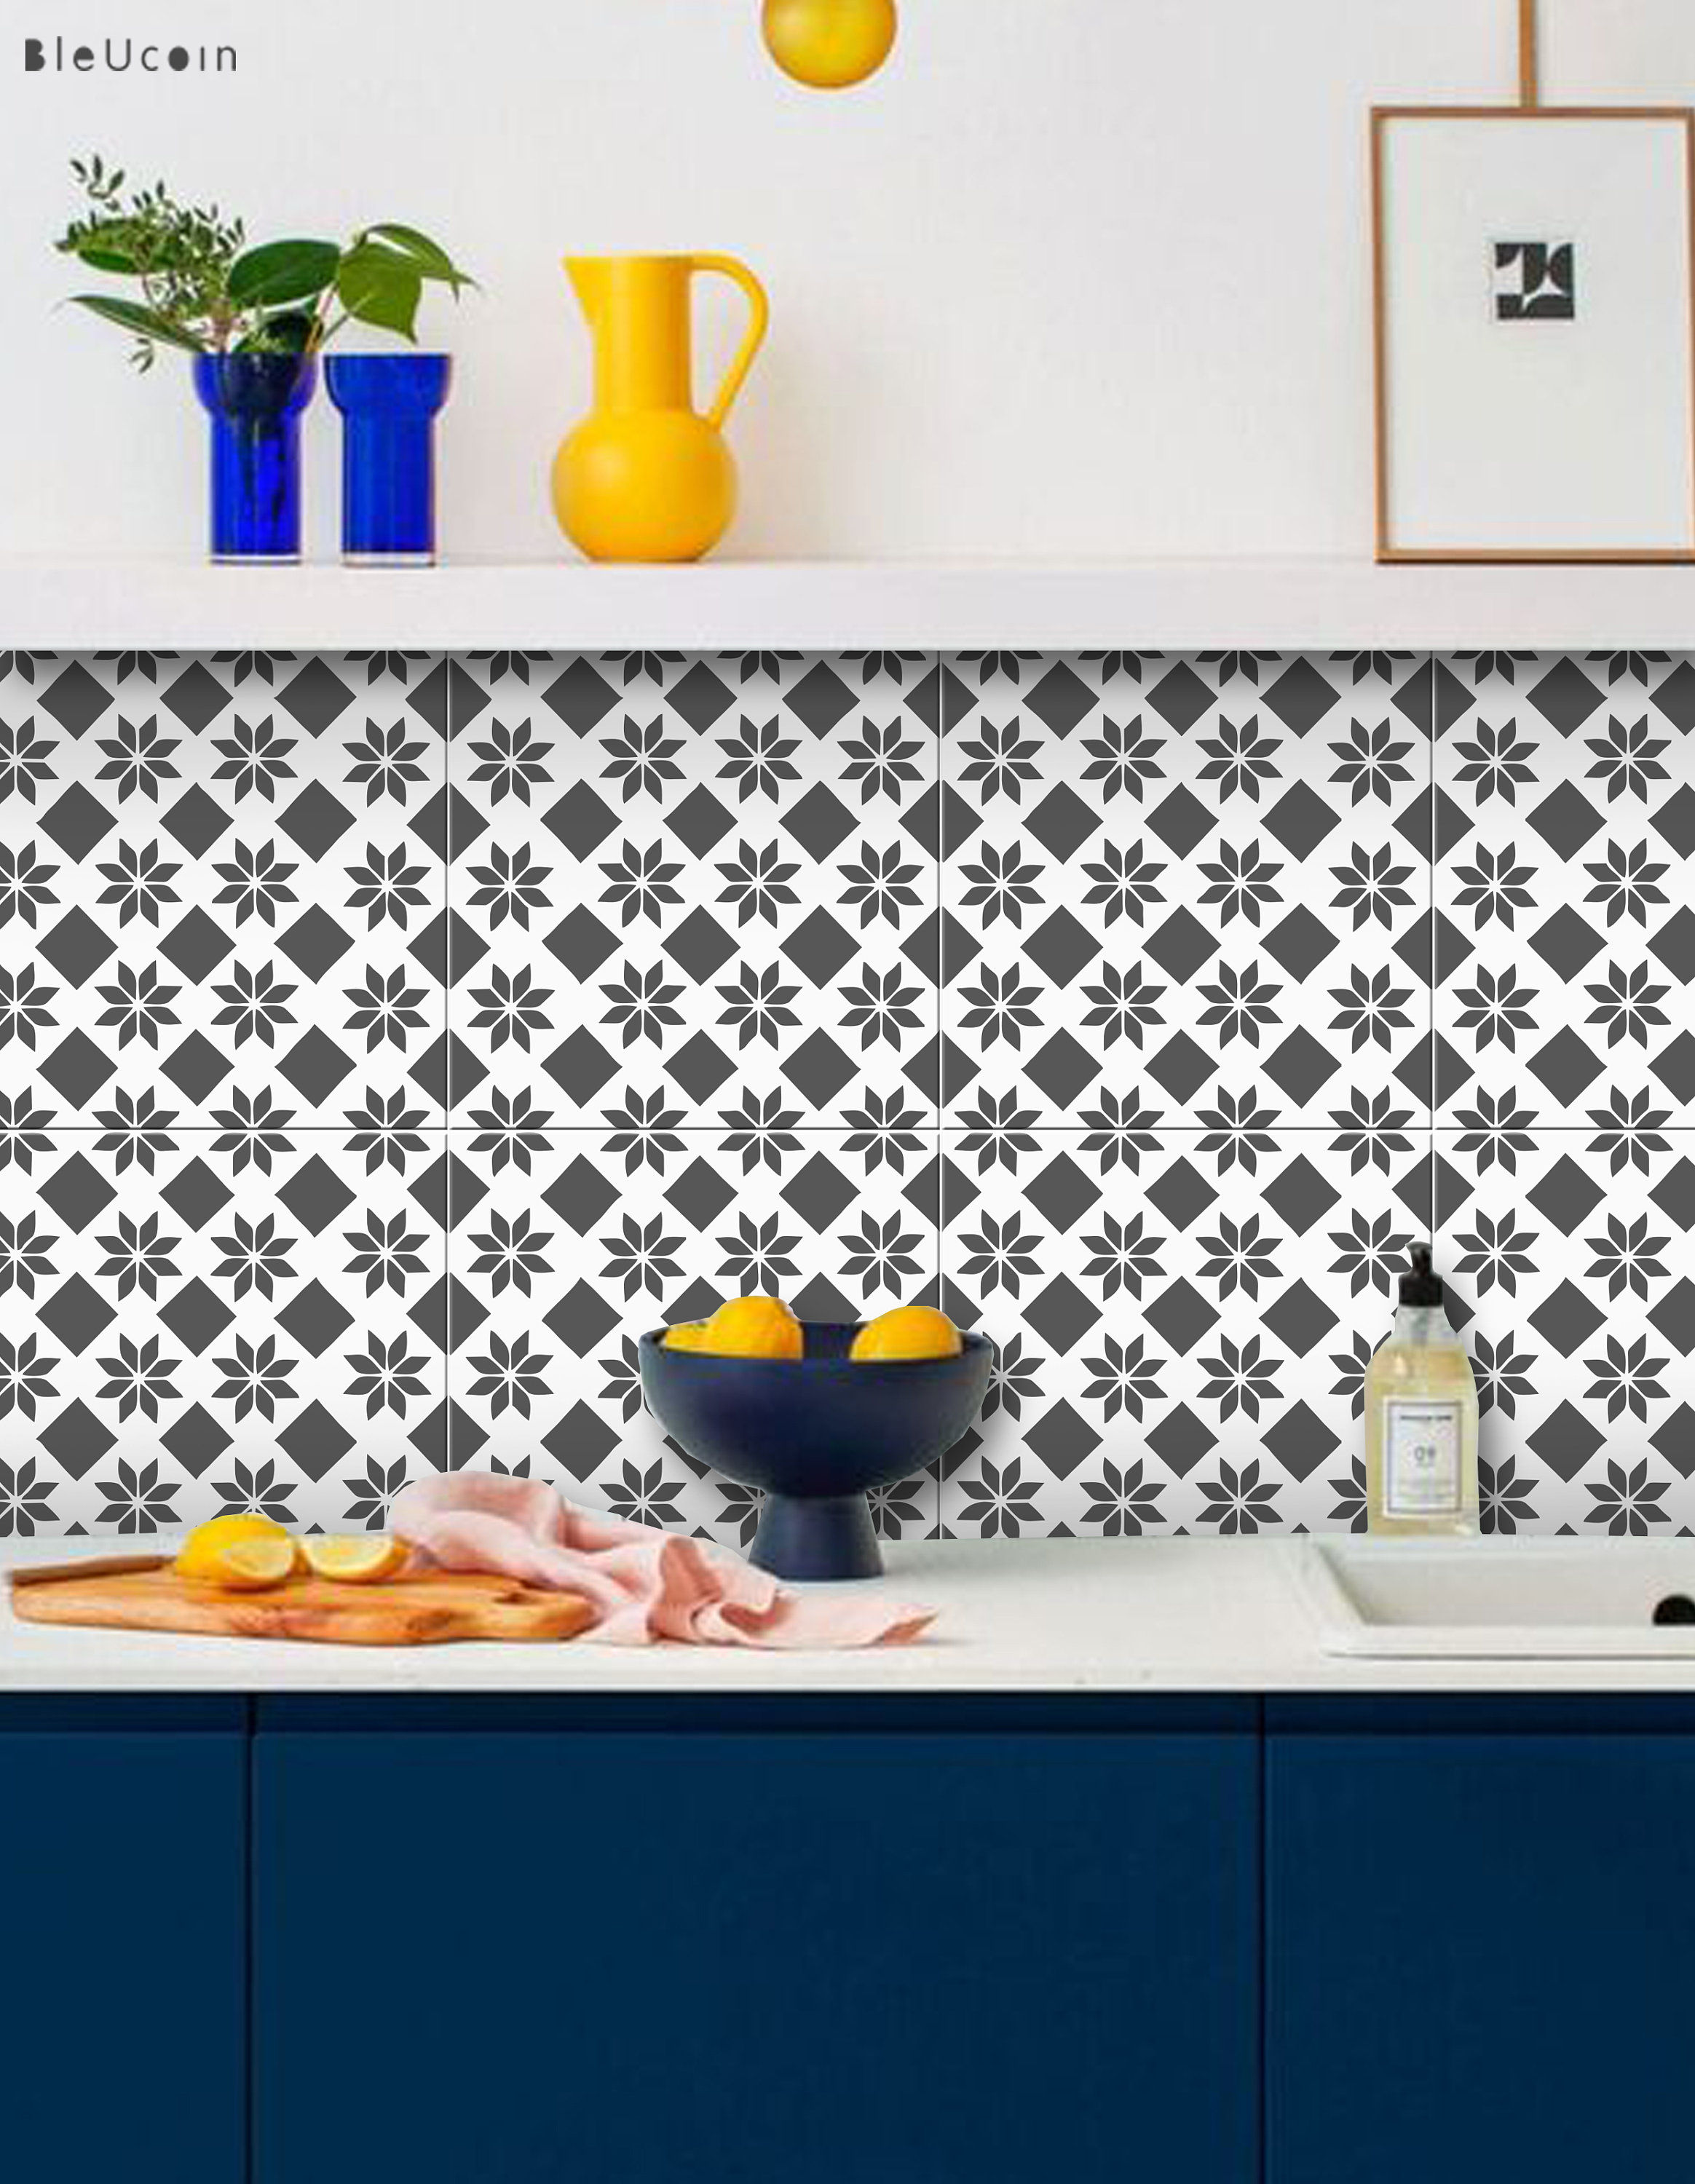 4Pcs Kitchen Waterproof Anti-Oil Tile Decal Wall Sticker Self